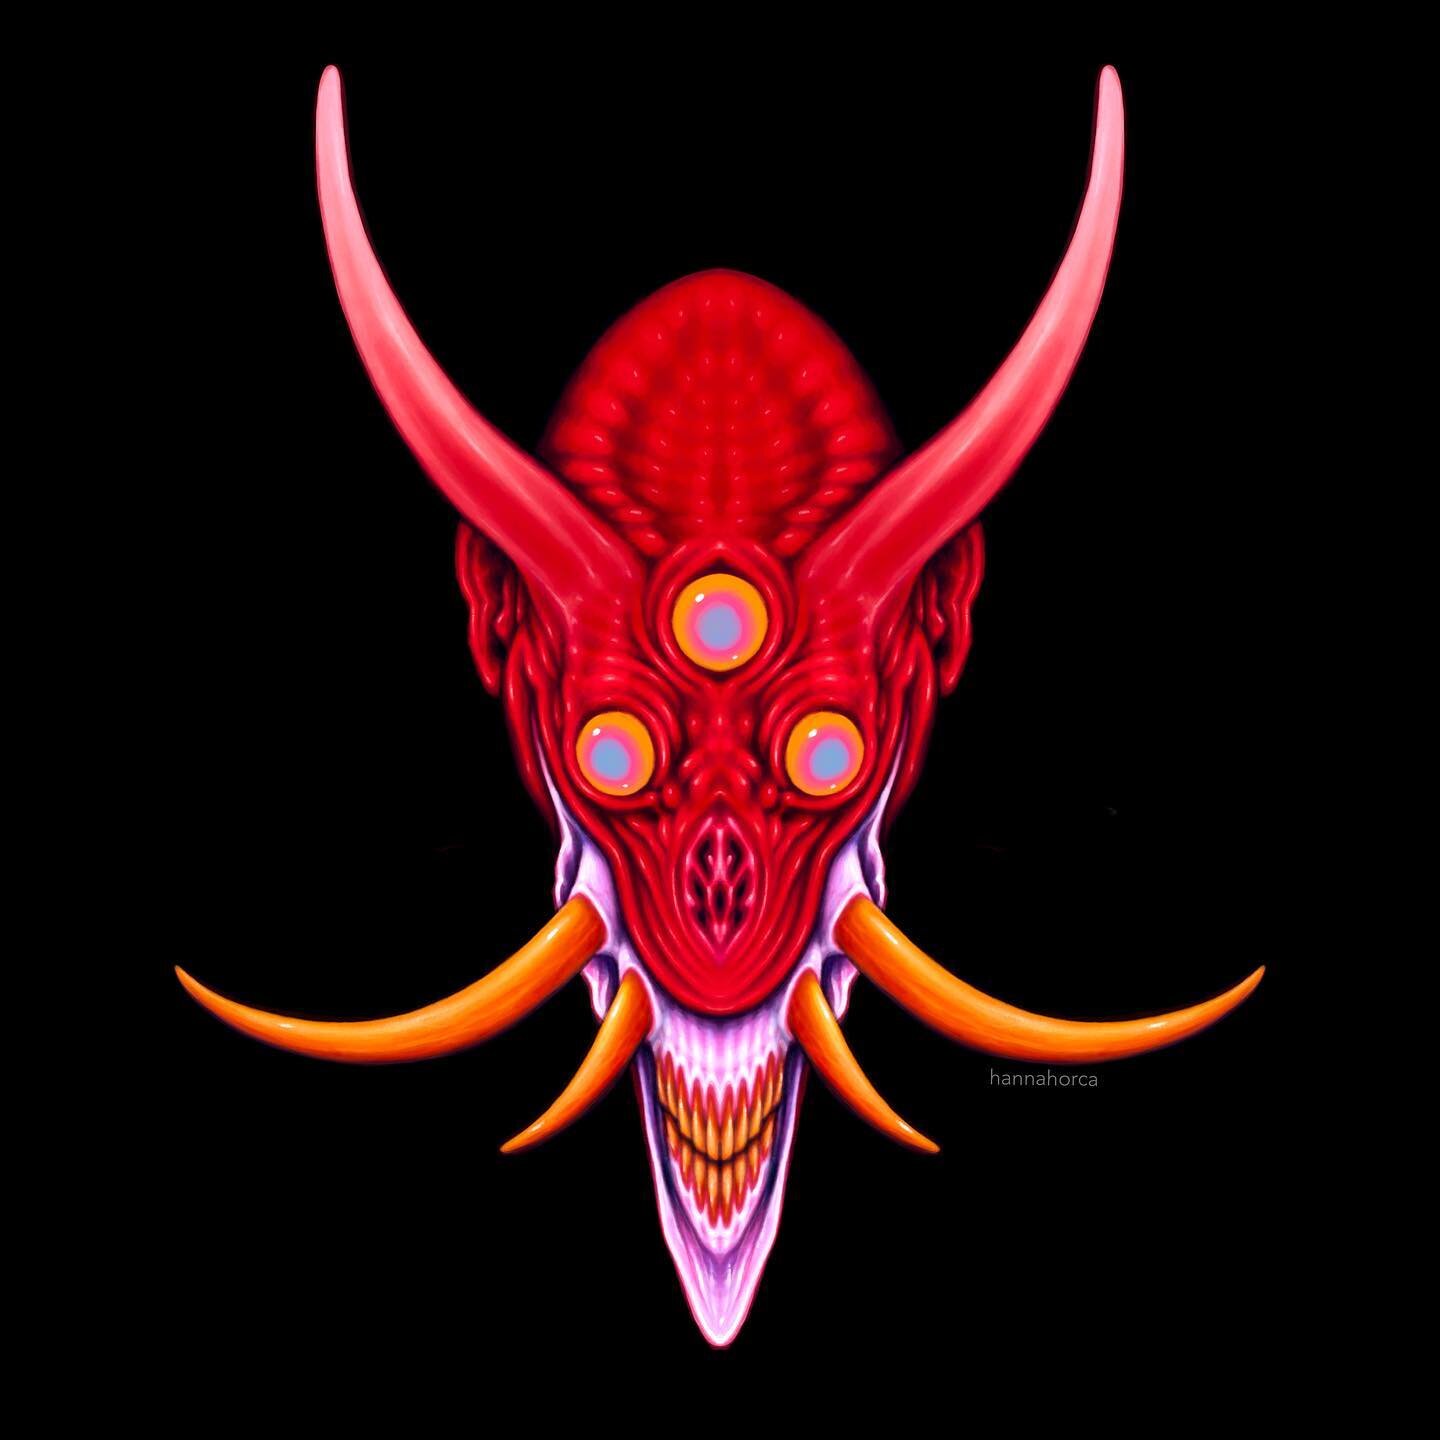 Red demon

#illustration #demonart #monsterart #darkart #digitalart #procreate #demon #monster #darkartist